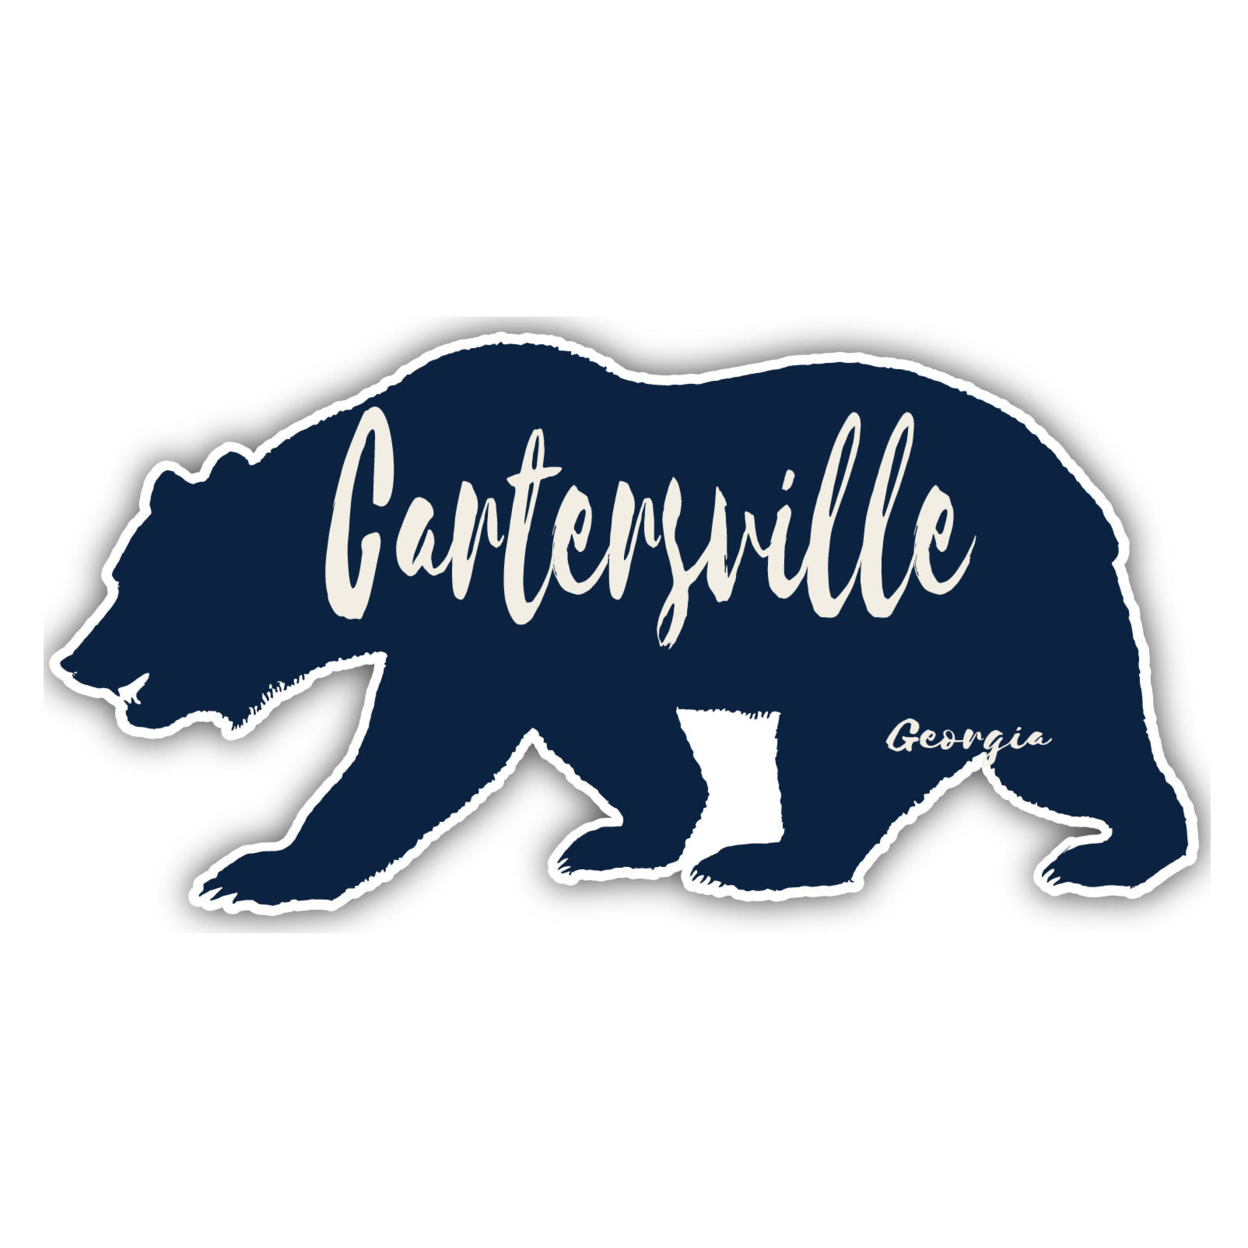 Cartersville Georgia Souvenir Decorative Stickers (Choose Theme And Size) - Single Unit, 12-Inch, Bear